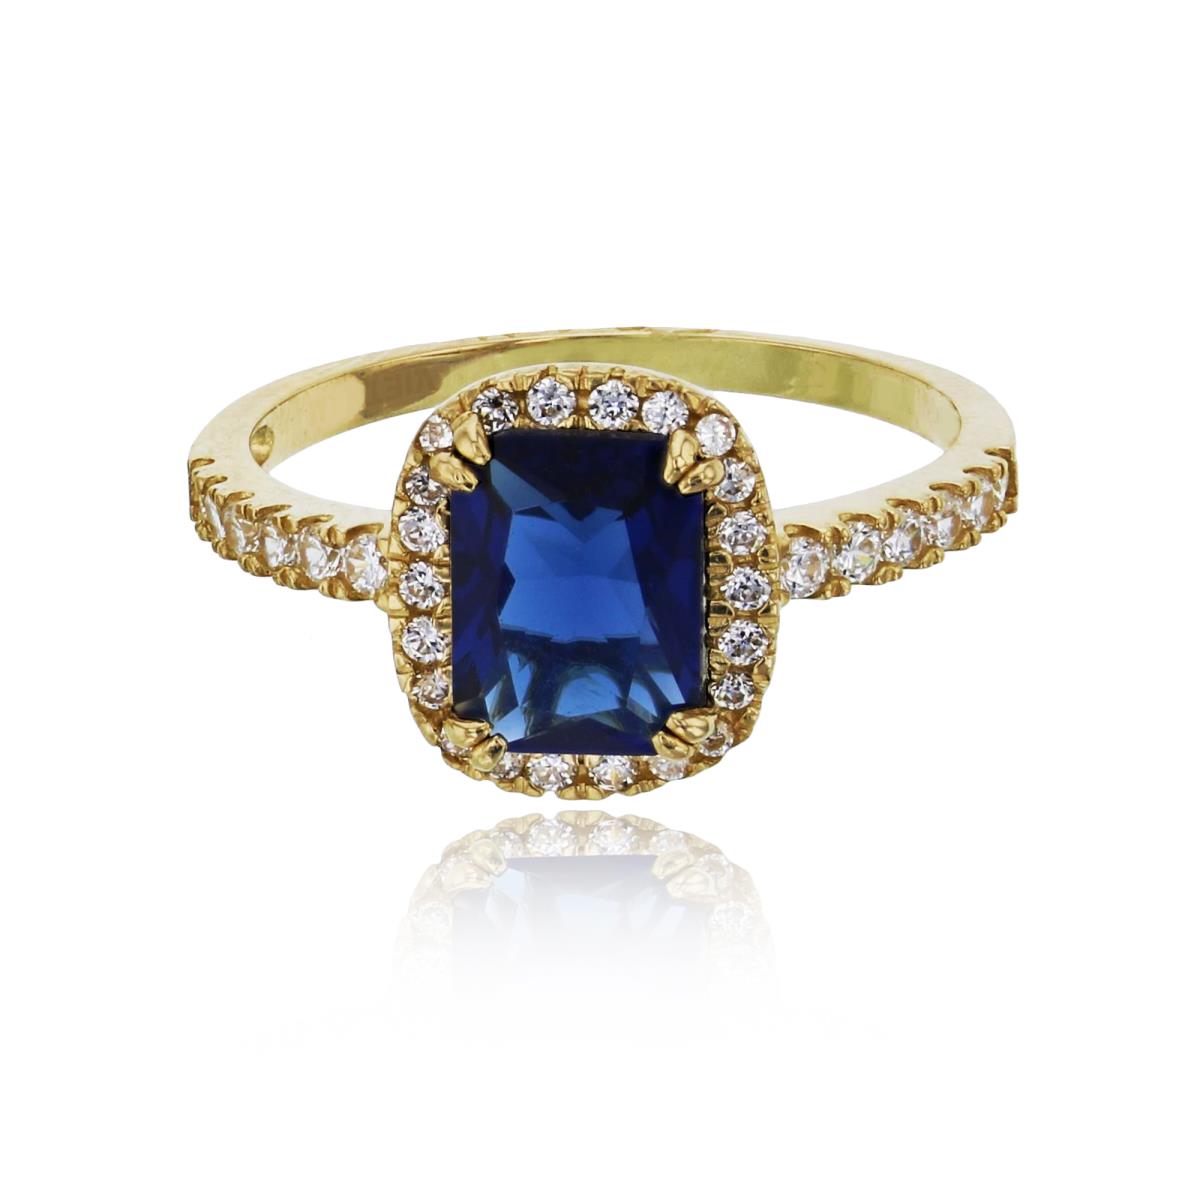 14K Yellow Gold 8x5mm Sapphire Emerald Cut & White CZ Halo Fashion Ring